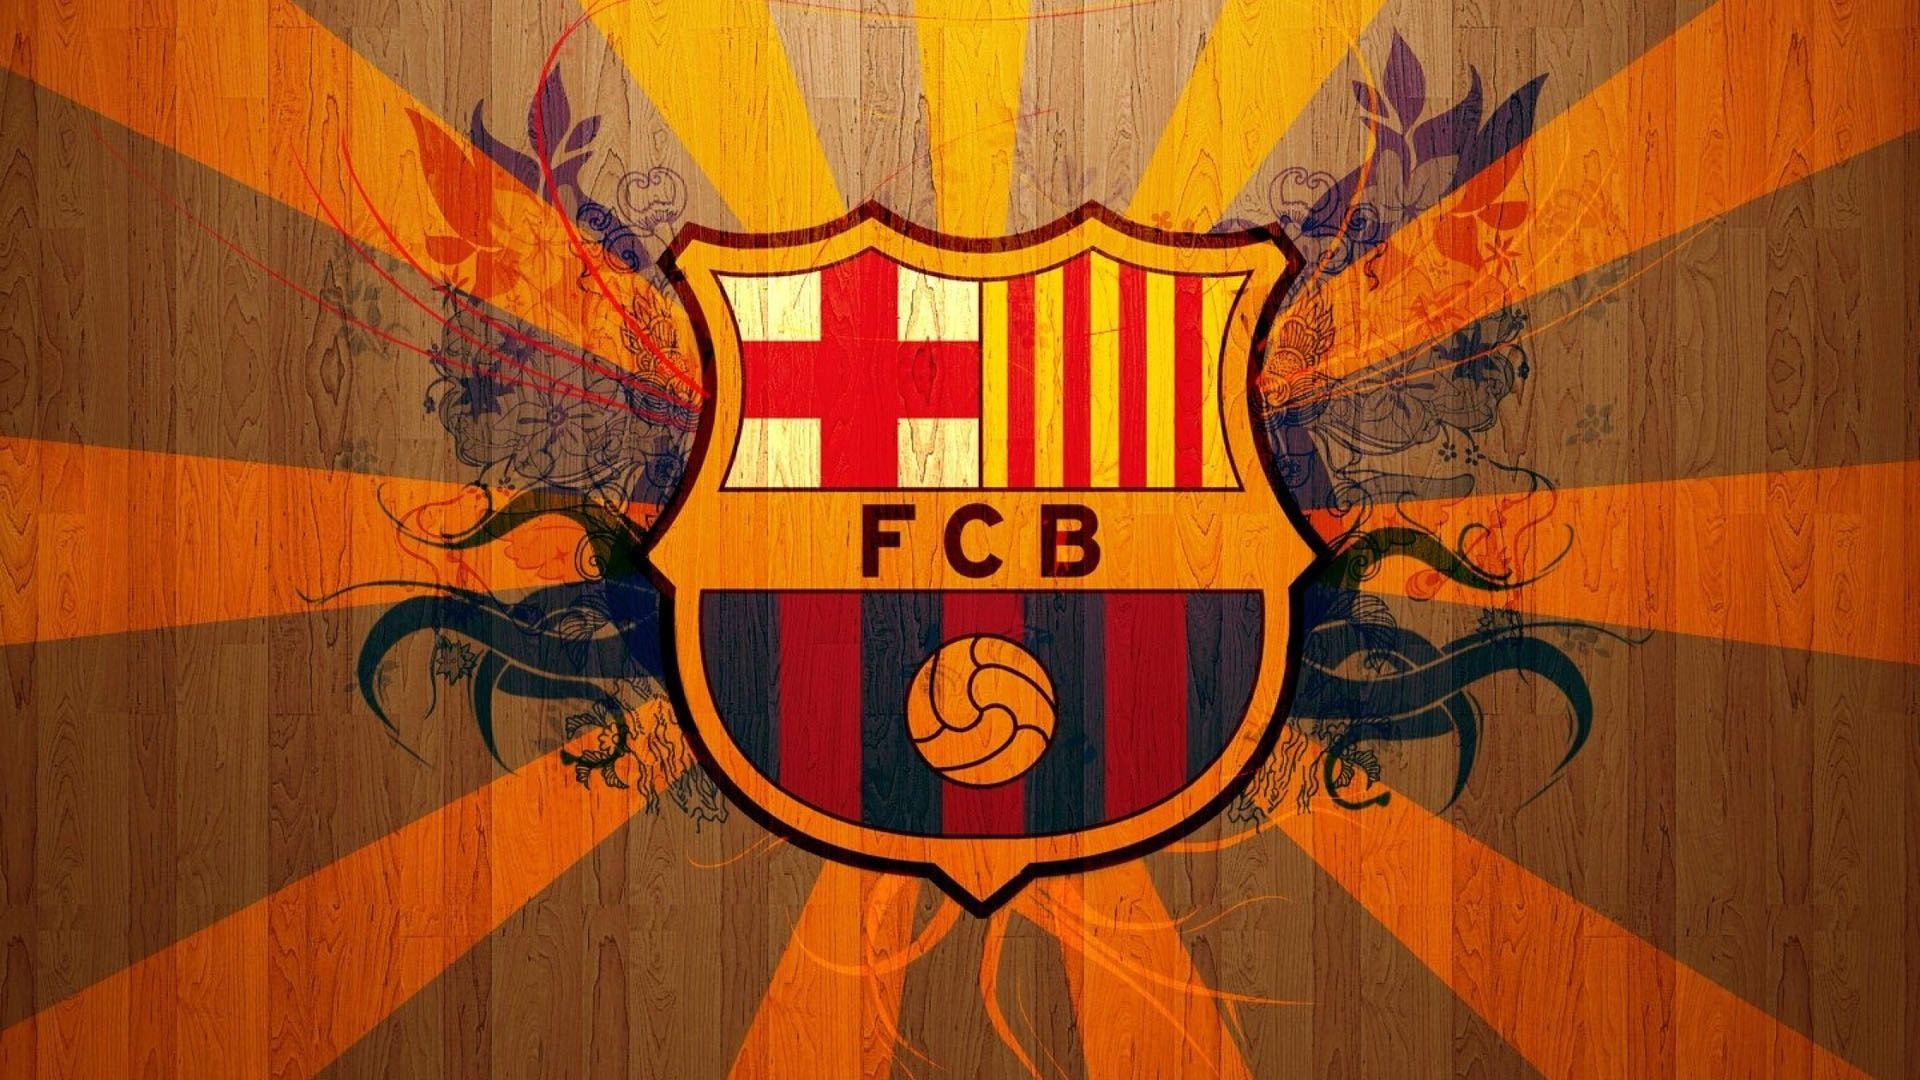 FC Barca Wallpaper Wide or HD